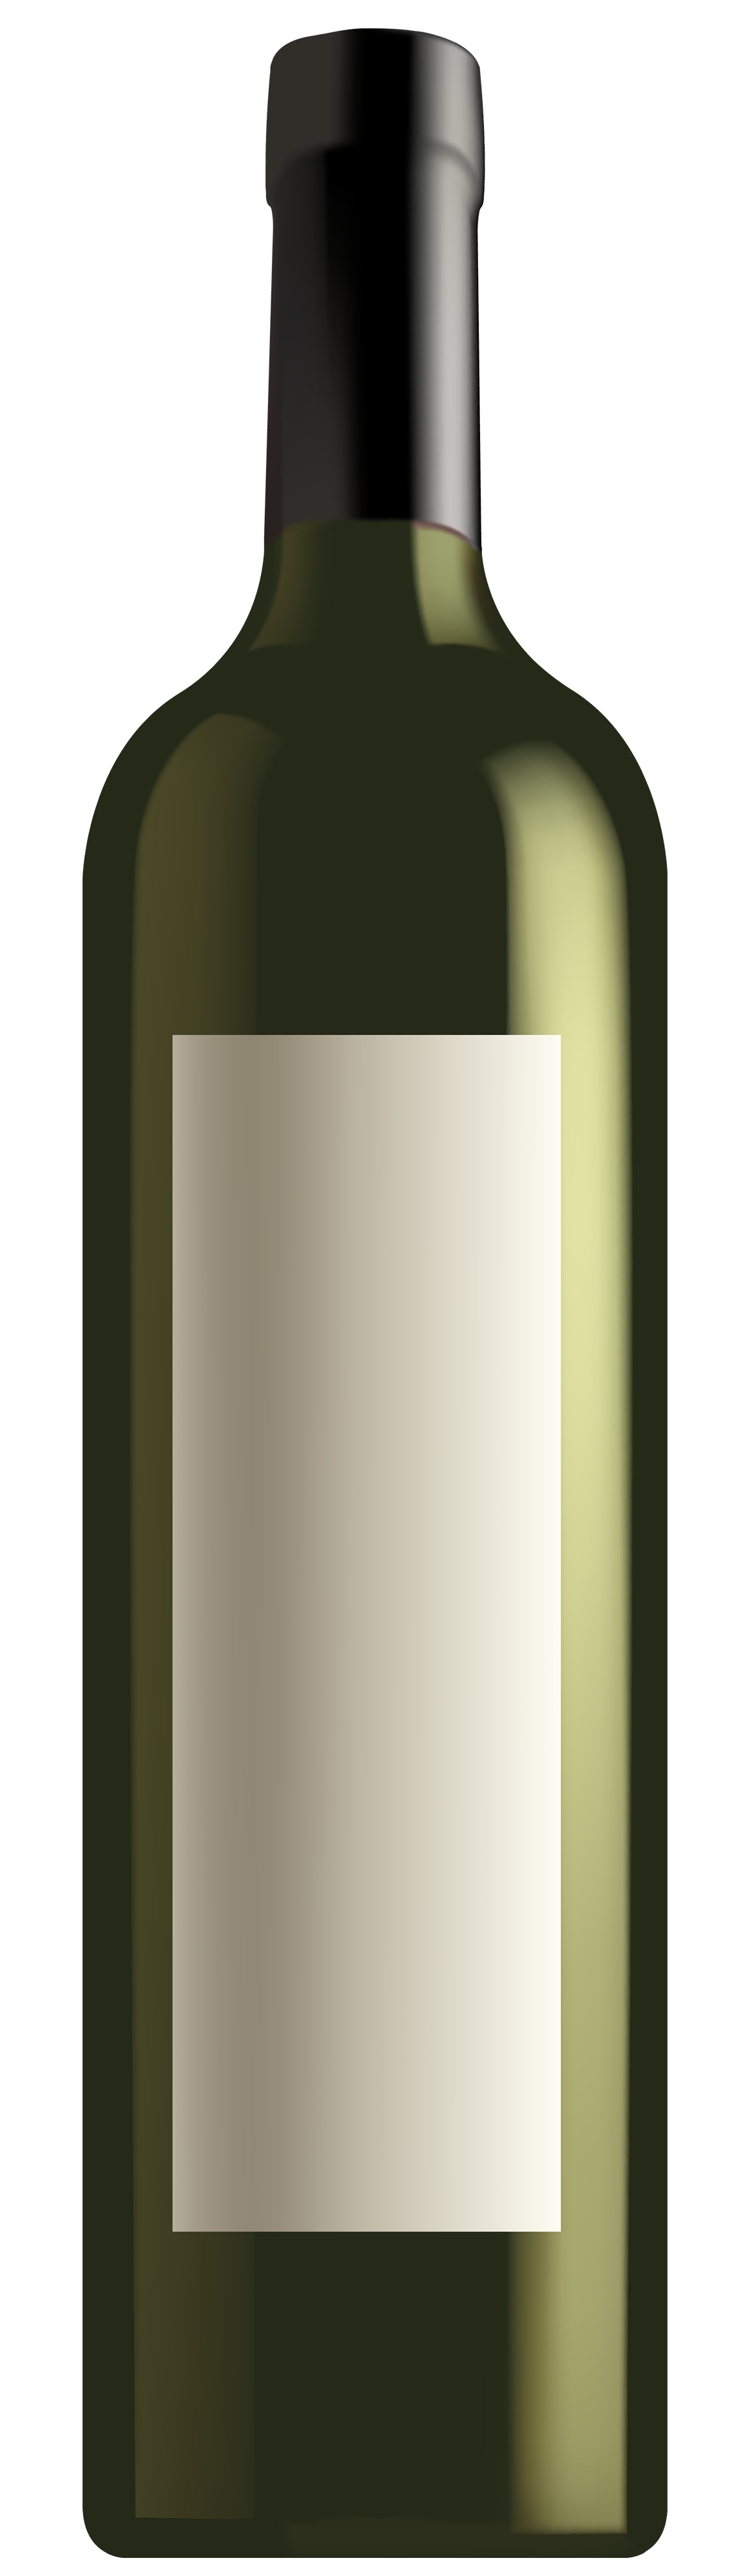 White wine bottle png. Green clipart best web